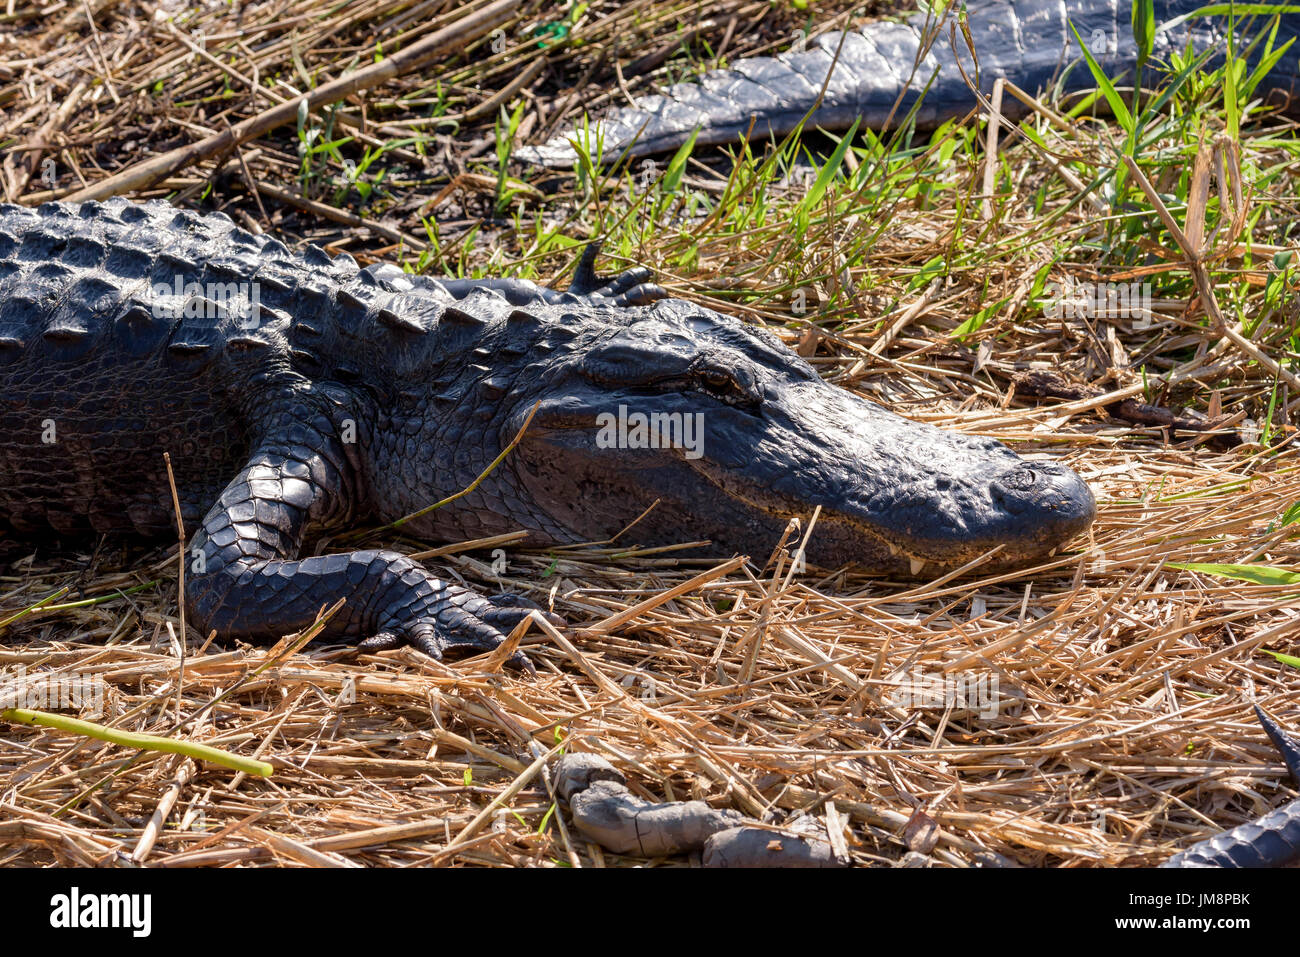 American alligator (Alligator mississippiensis) basking, Anhinga Trail, Everglades National Park, Florida, USA Stock Photo